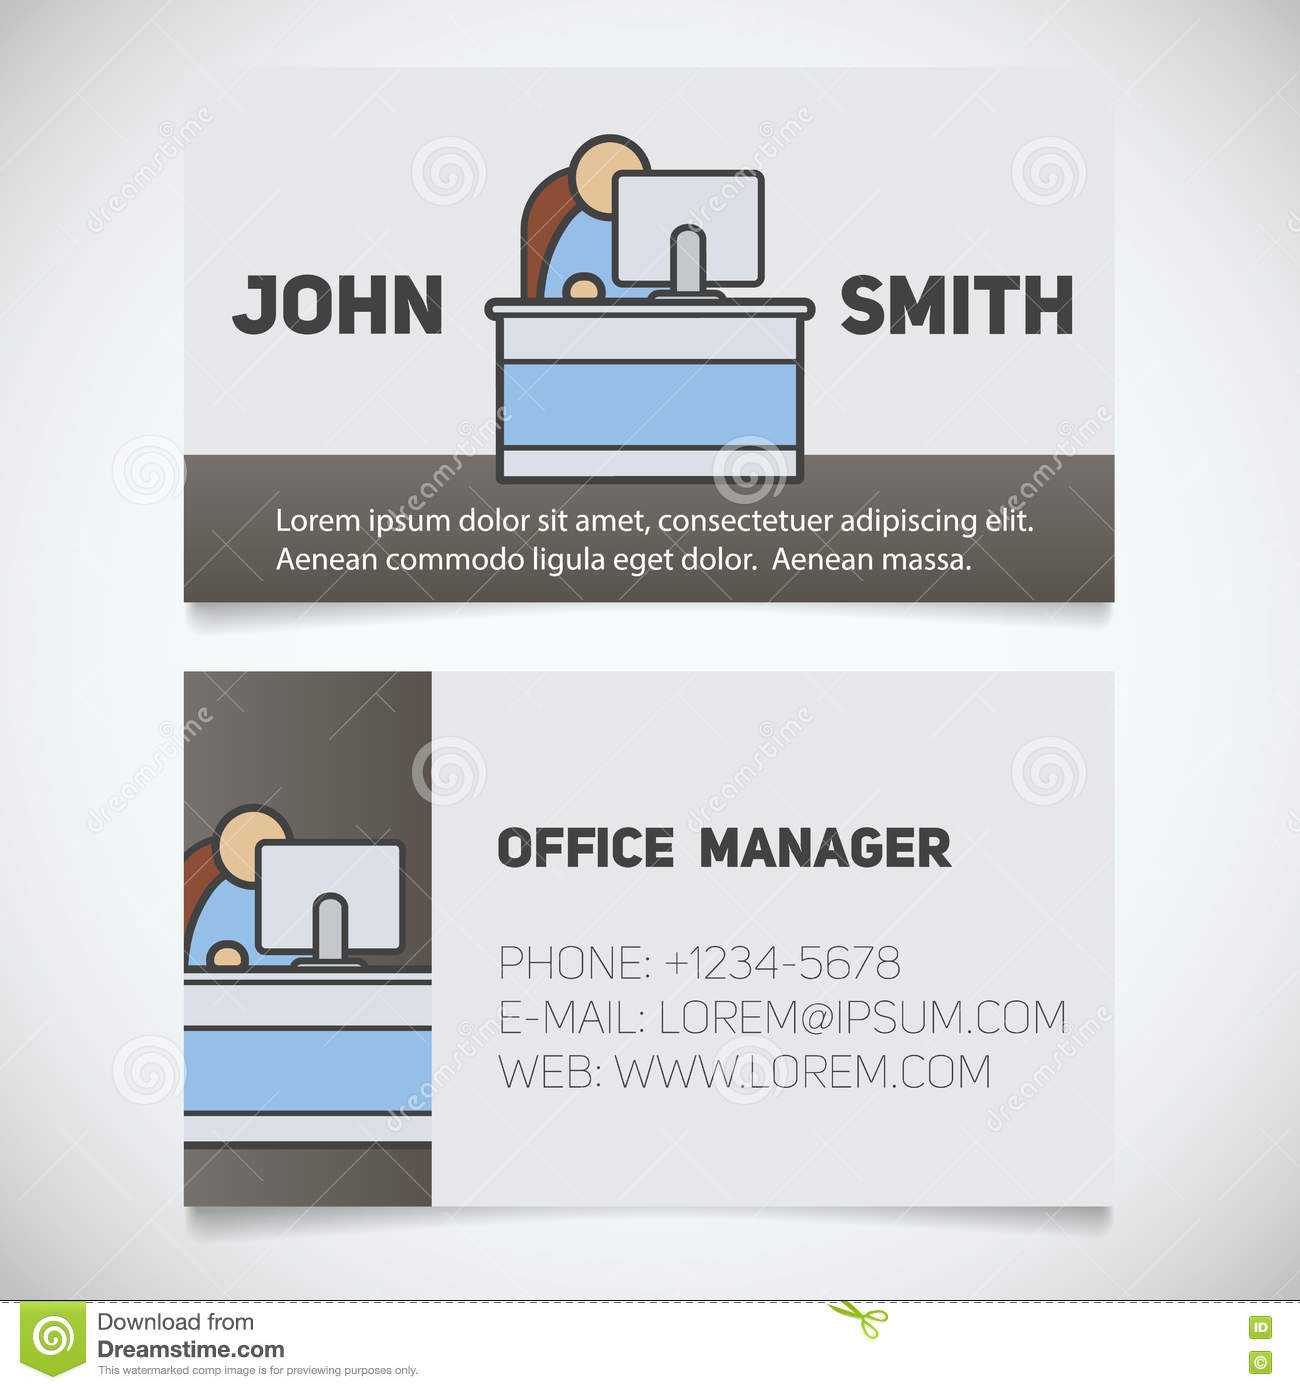 017 Template Ideas Business Card Print Office Manager Logo For Office Max Business Card Template